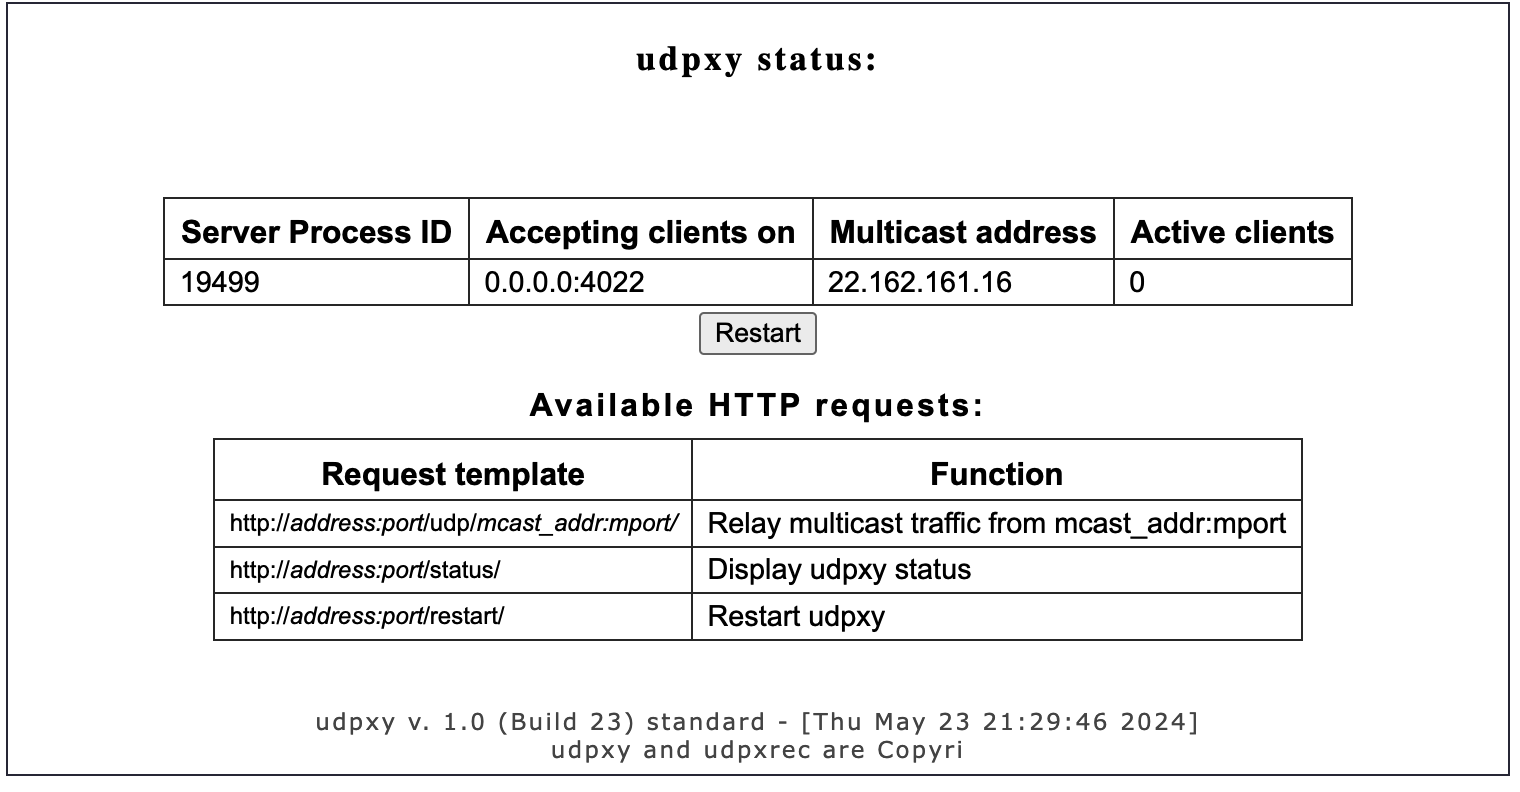 udpxy status